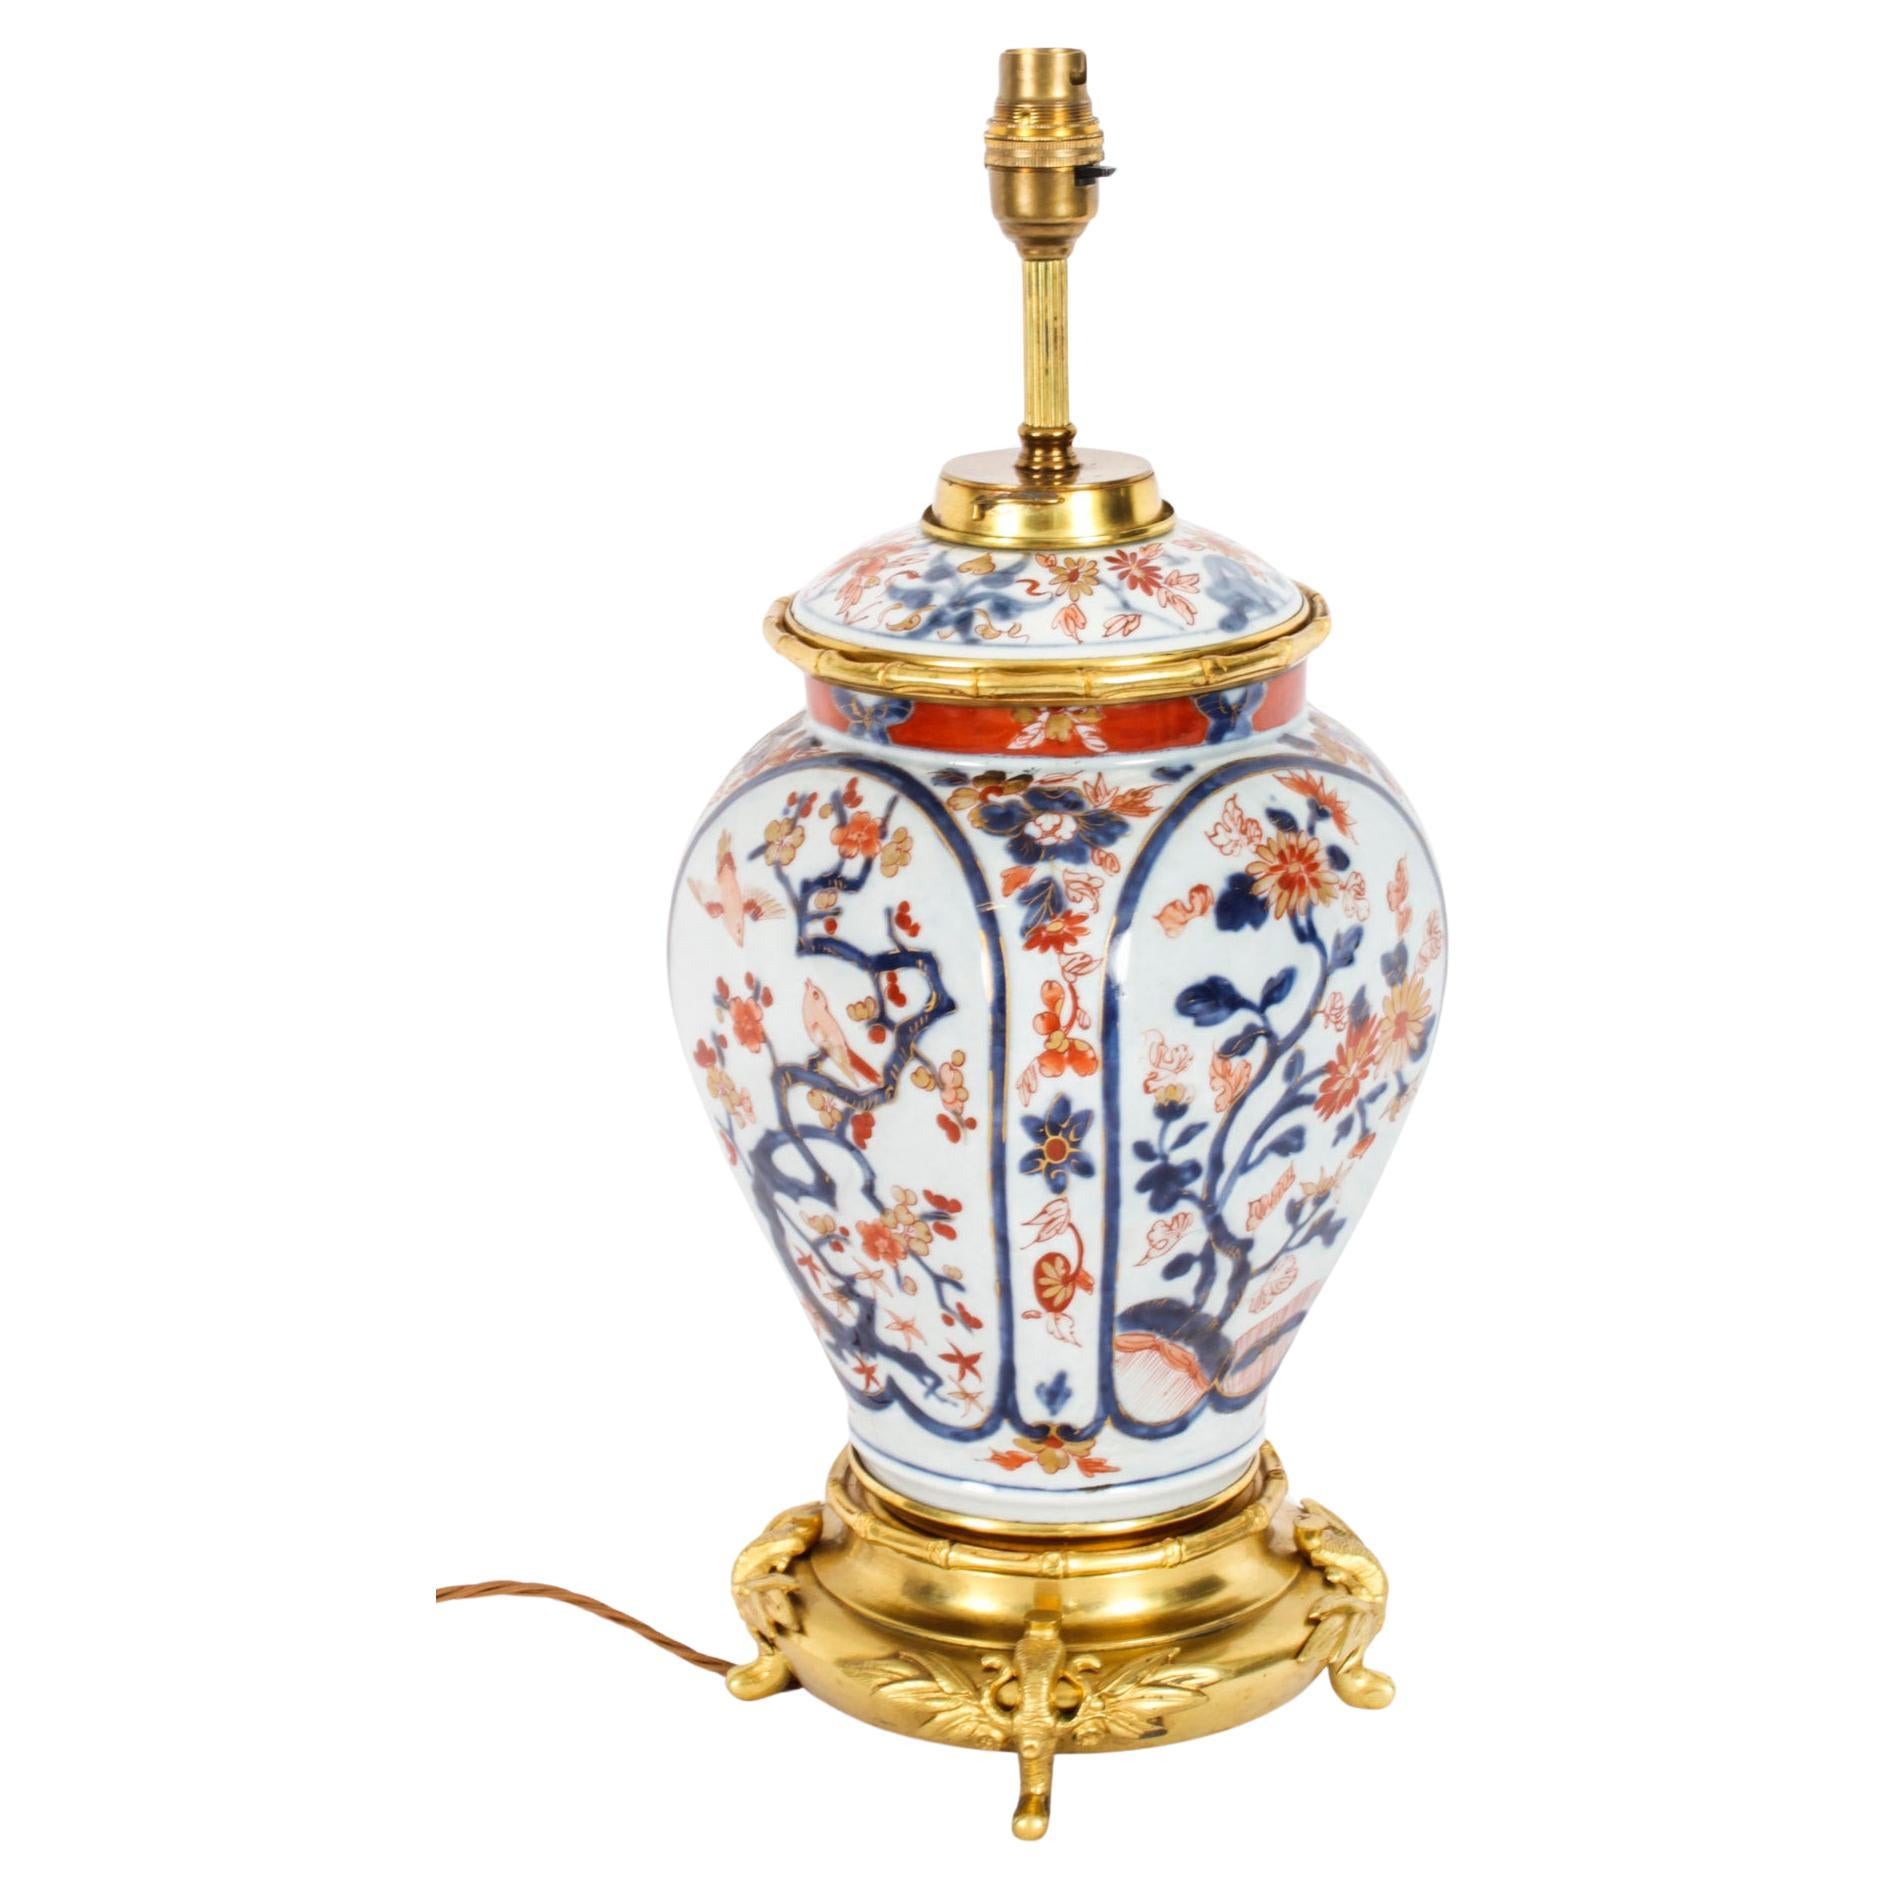 Antique Japanese Imari Porcelain Table Lamp c. 1840 19th Century For Sale